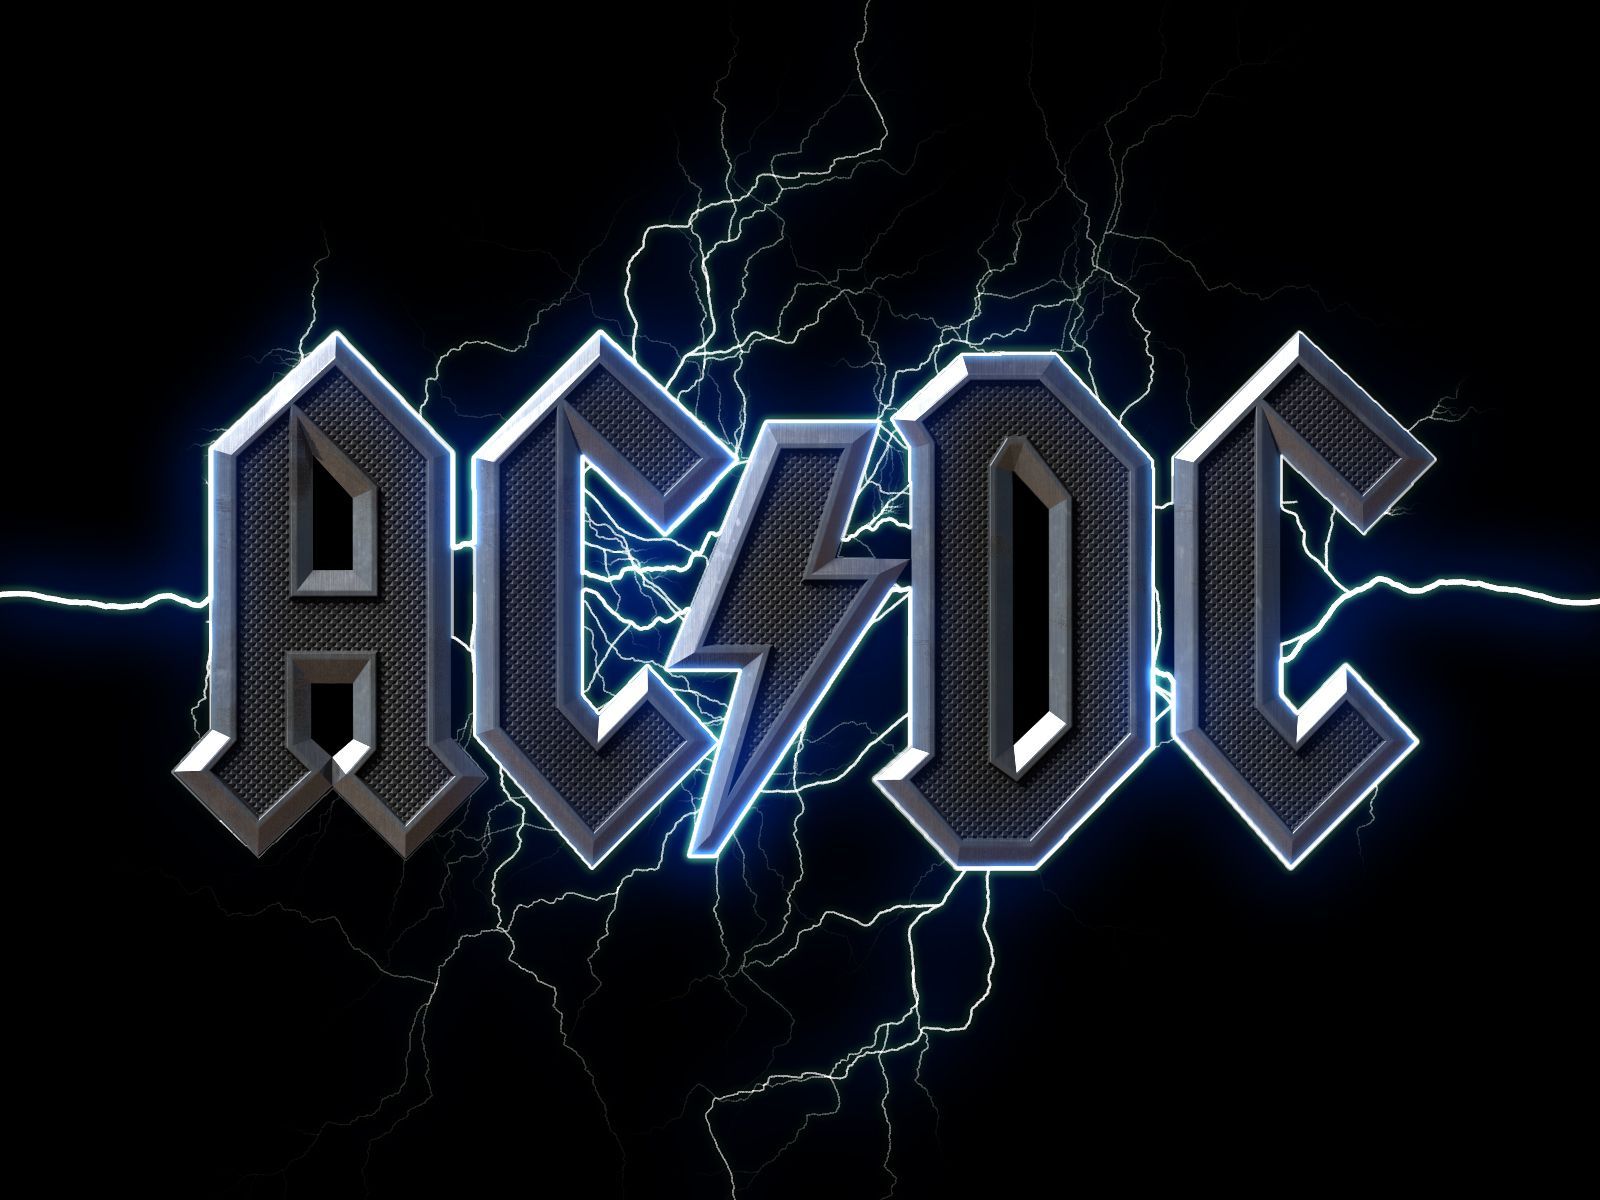 AC/DC - AC/DC Wallpaper (8277118) - Fanpop